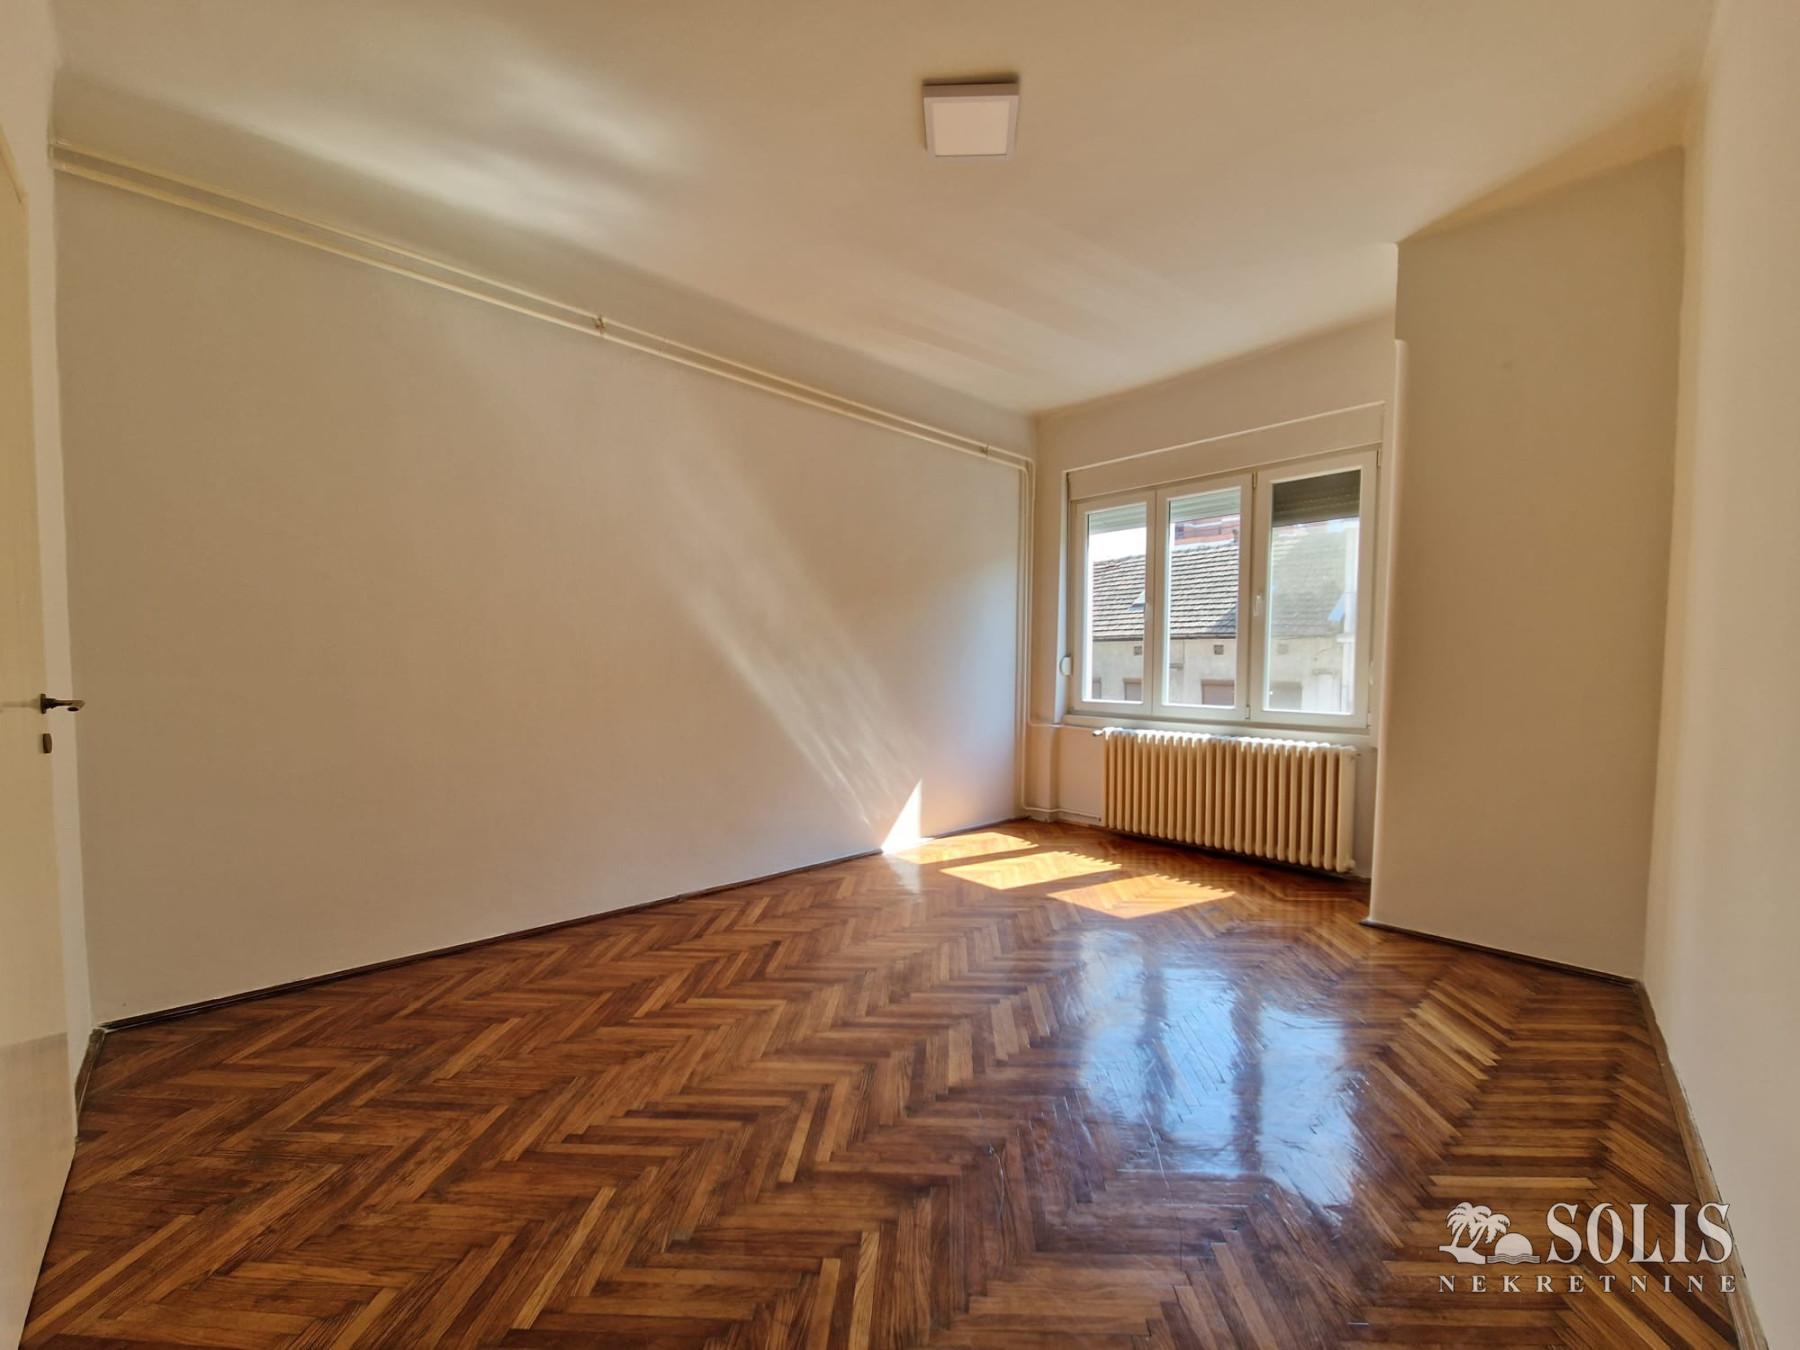 Apartment, Two-room apartment (one bedroom)<br>46 m<sup>2</sup>, Centar Riblja pijaca